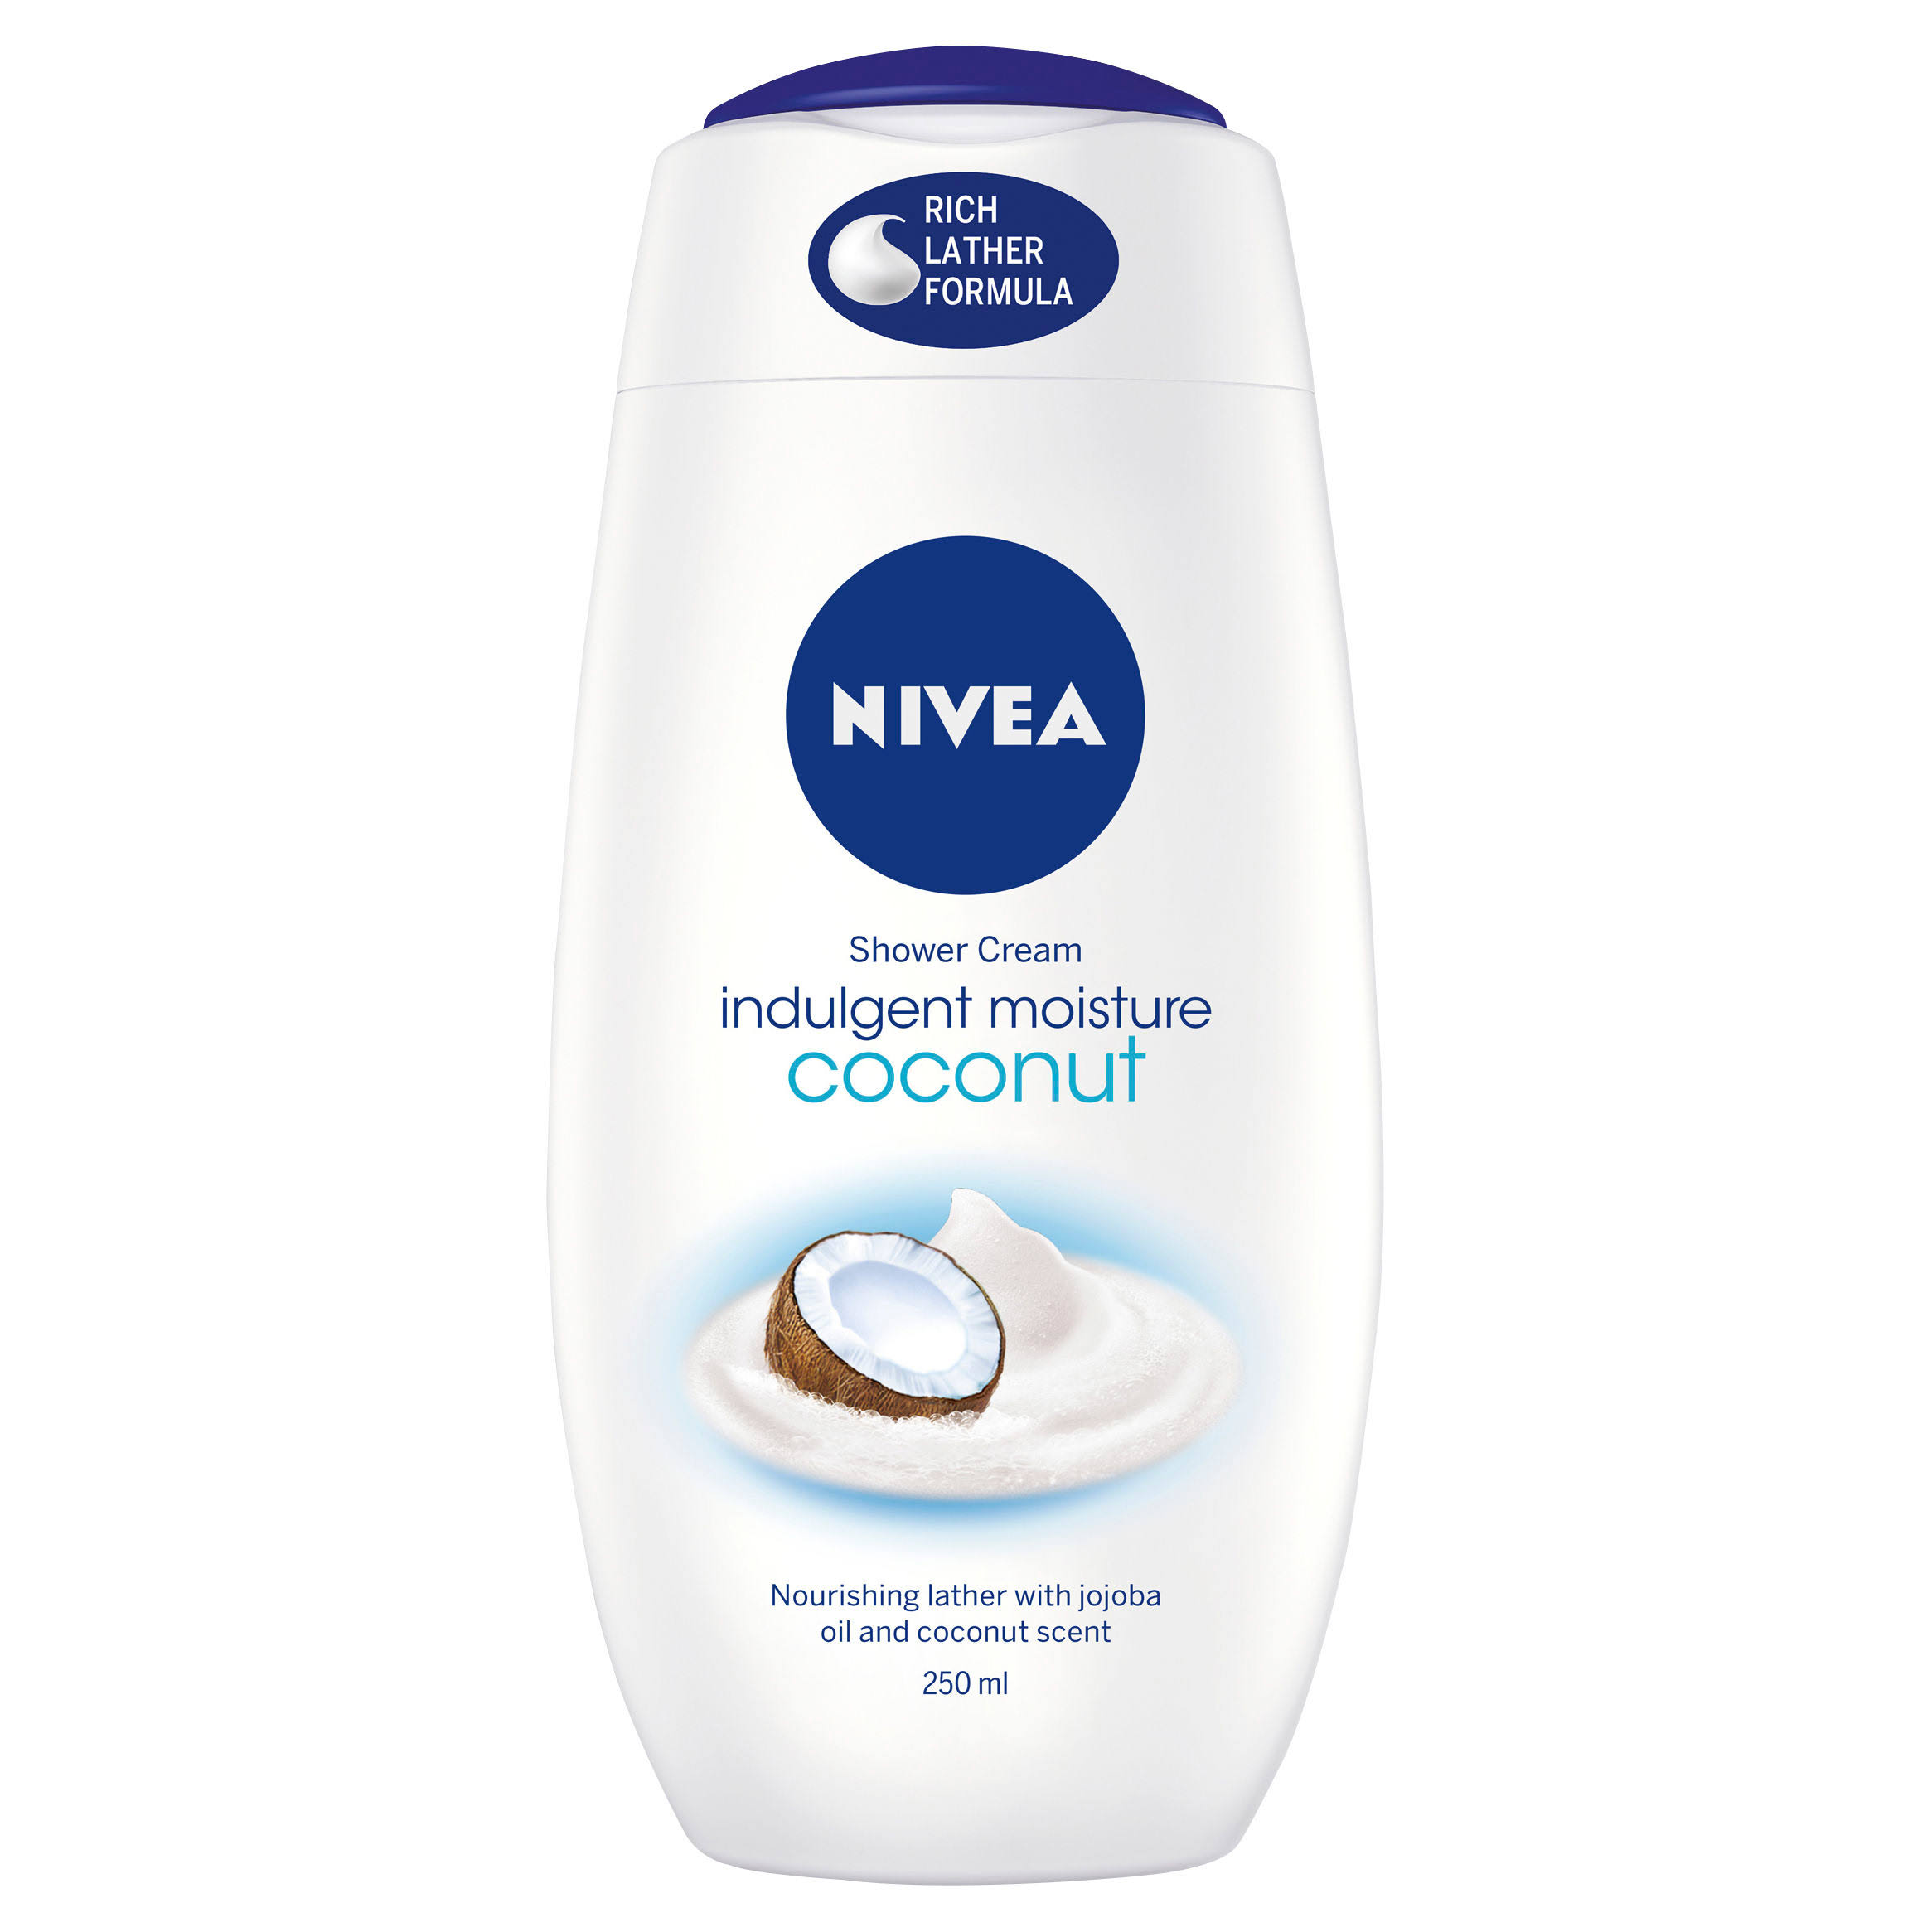 Nivea Indulging Moisture Caring Shower Cream - Coconut, 250ml